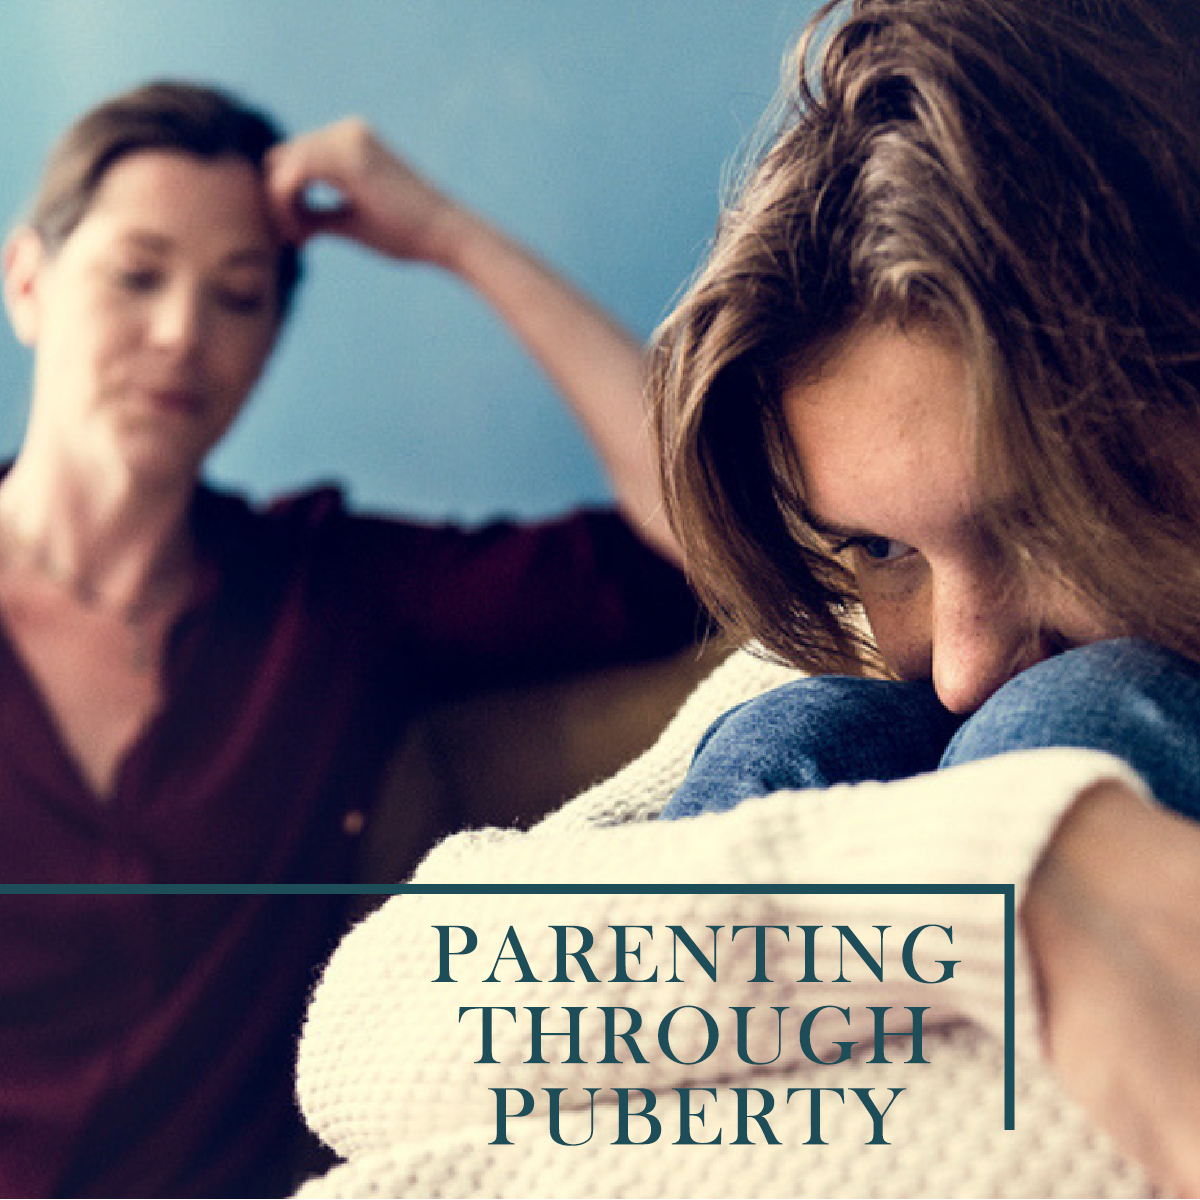 Parenting through puberty.jpg